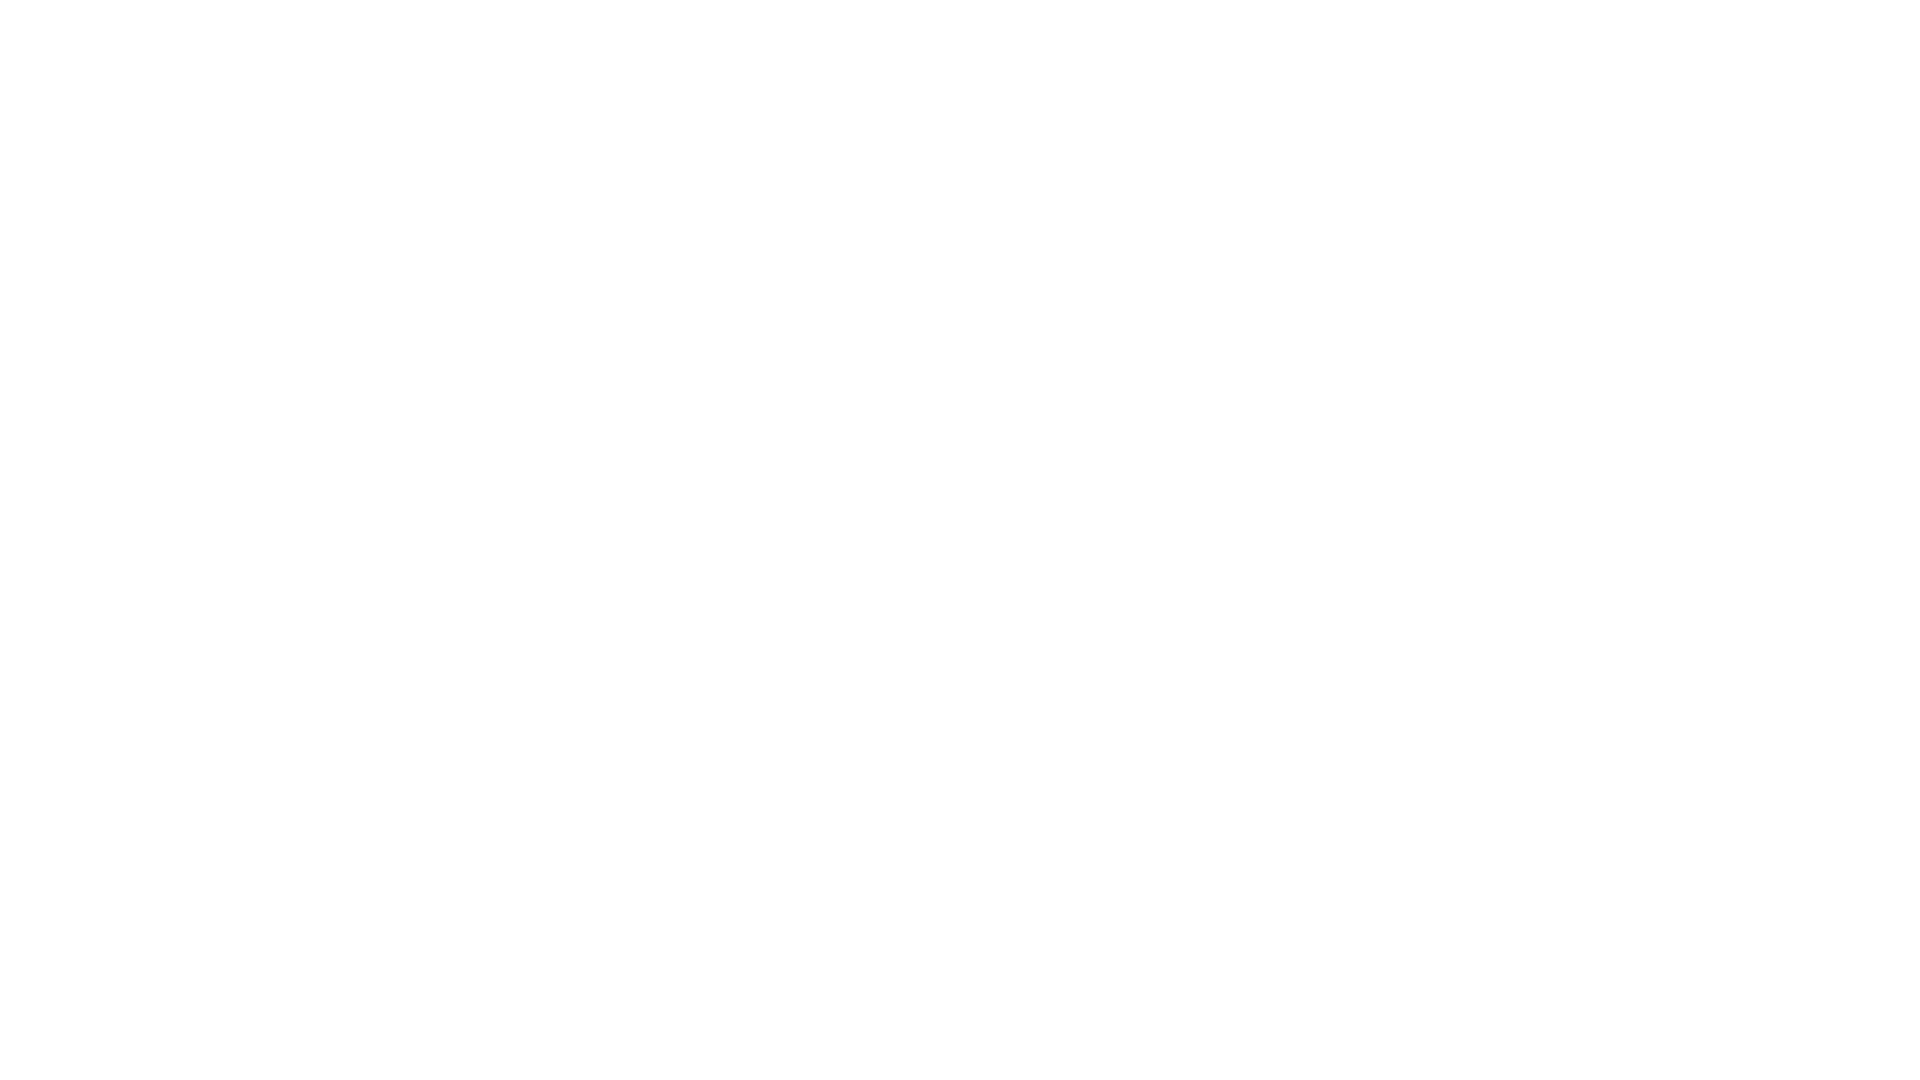 chrissquier.com